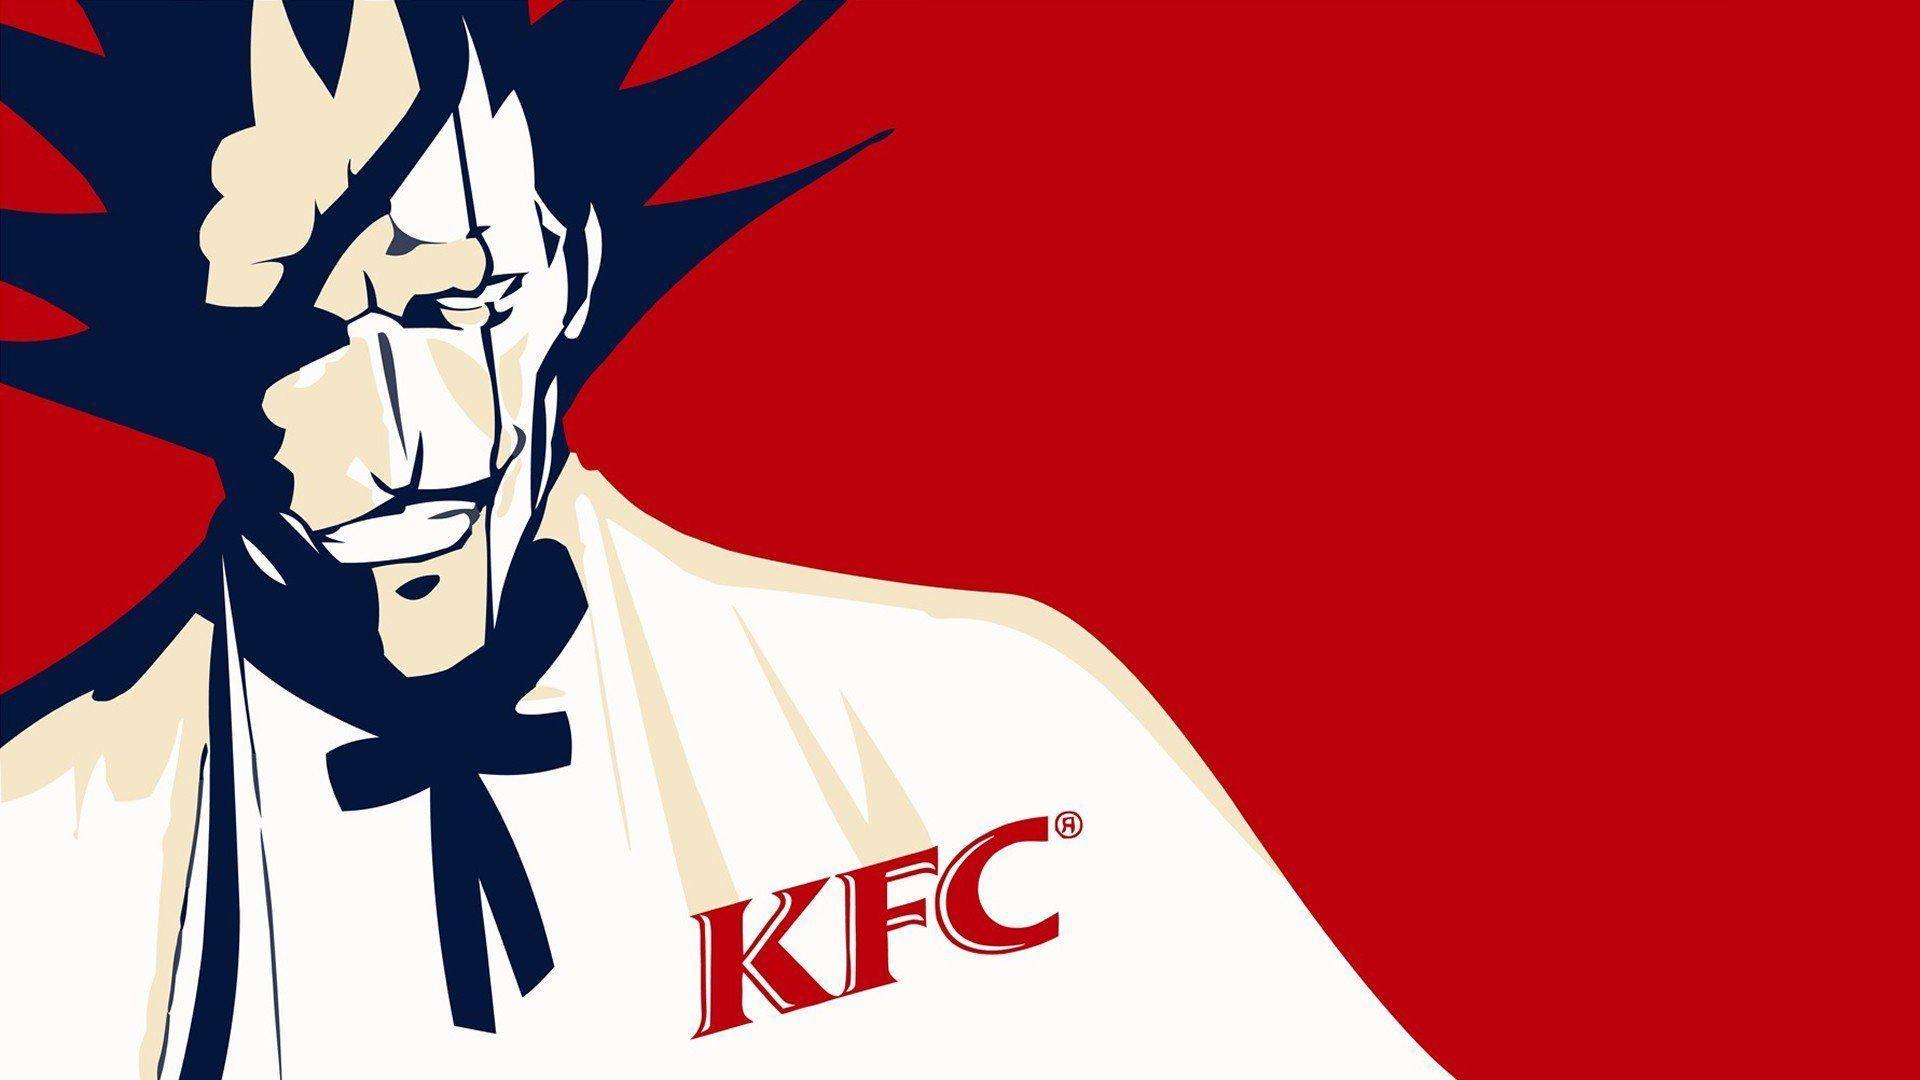 KFC Windows 11 Wallpaper 4k